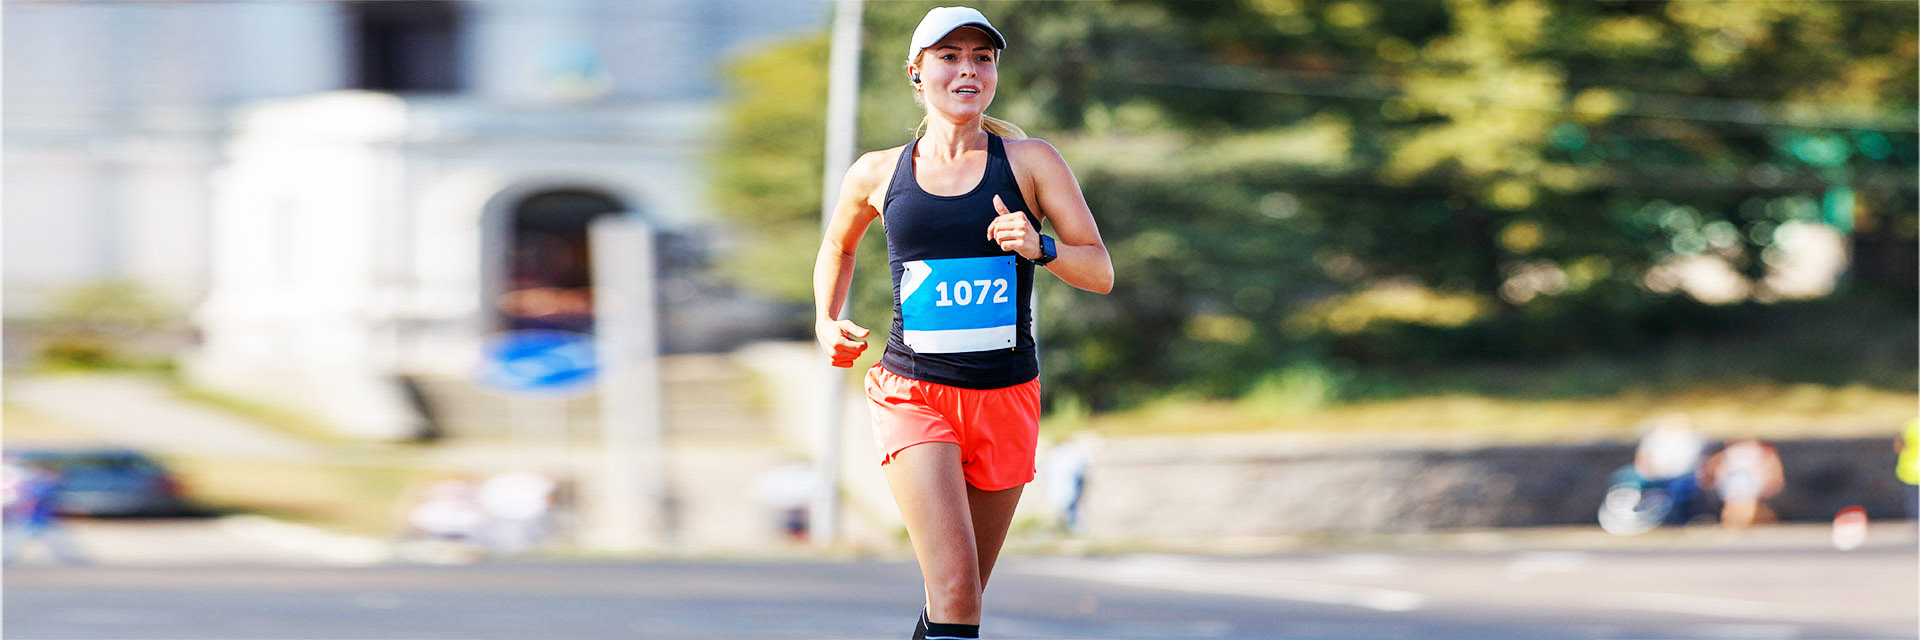 Woman running in race